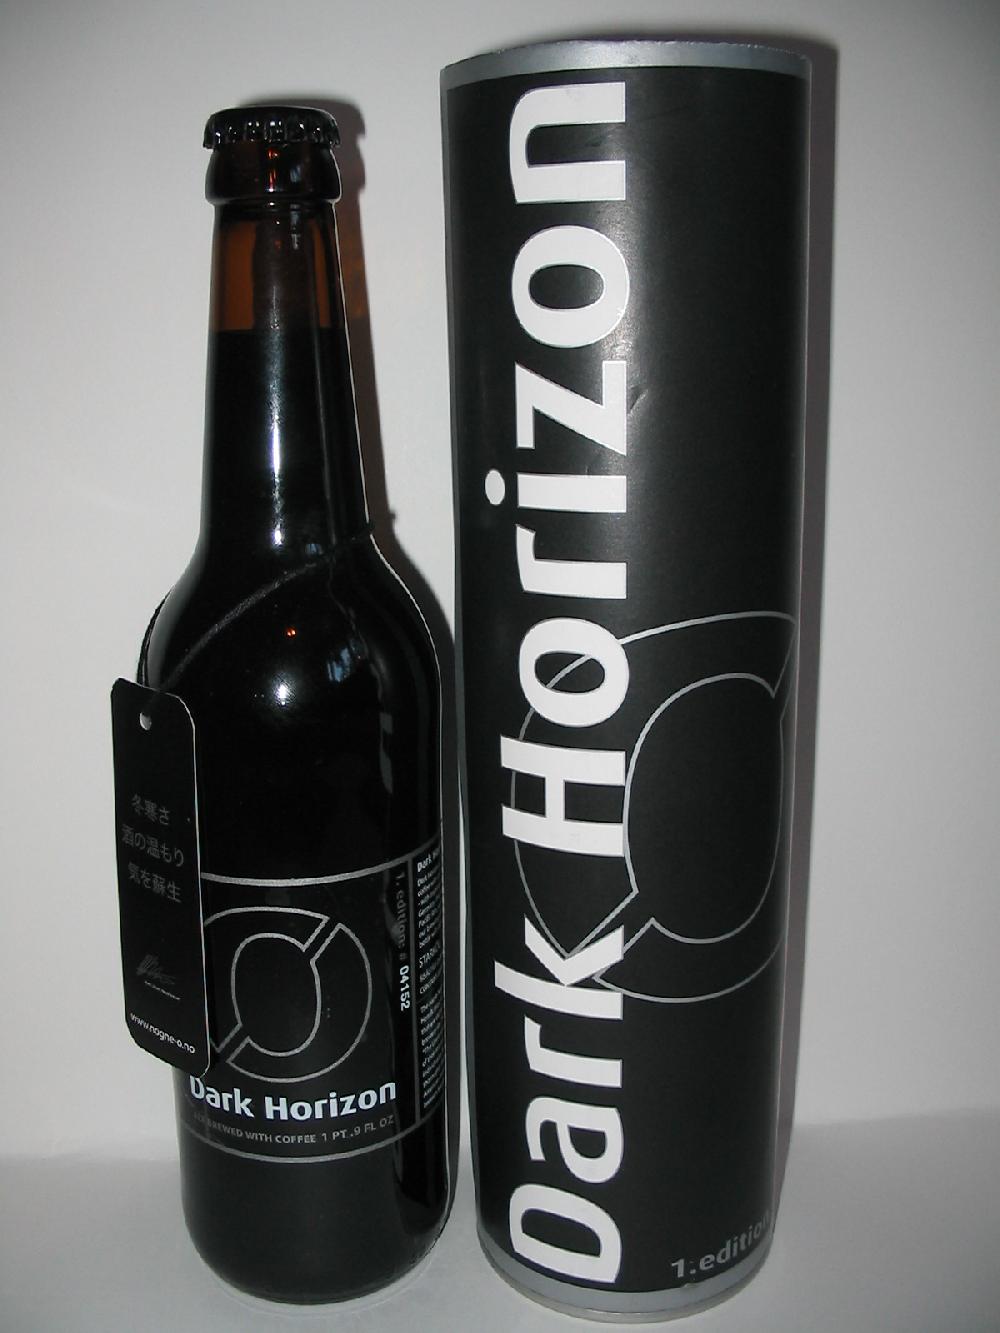 Nøgne Ø Dark Horizon (First Edition) bottle by Nøgne Ø; Det Kompromissløse Bryggeri AS 